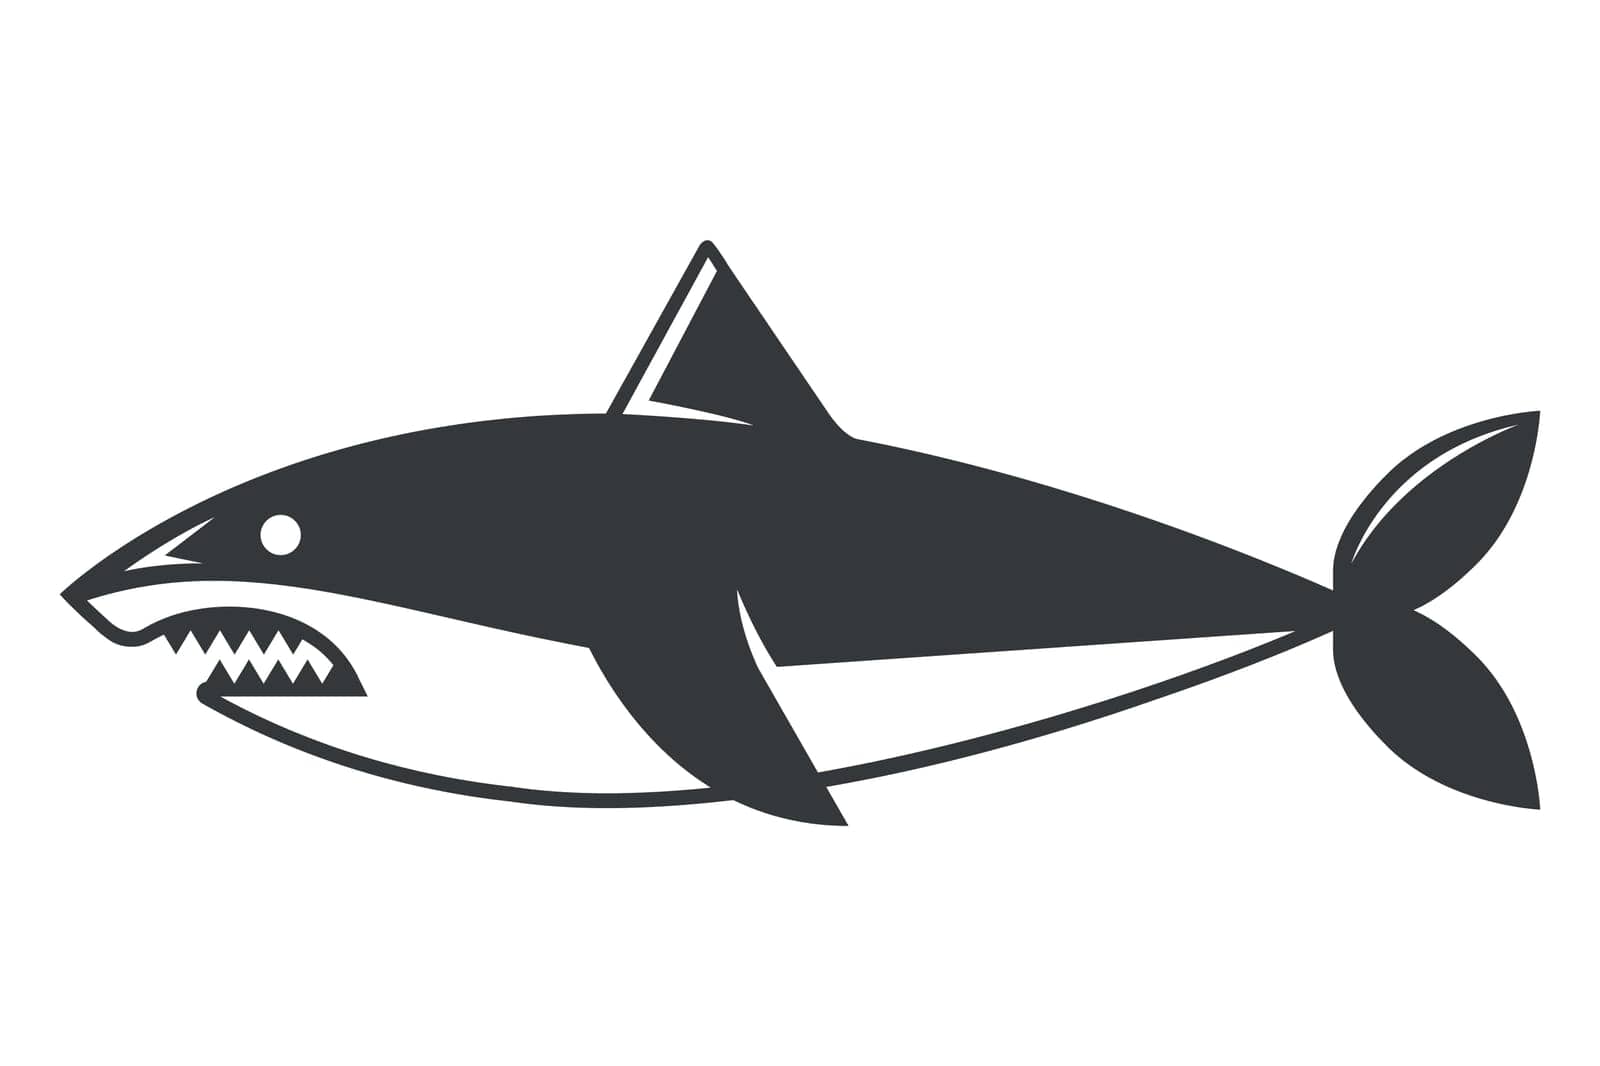 black dangerous shark icon isolated on white background. flat vector illustration